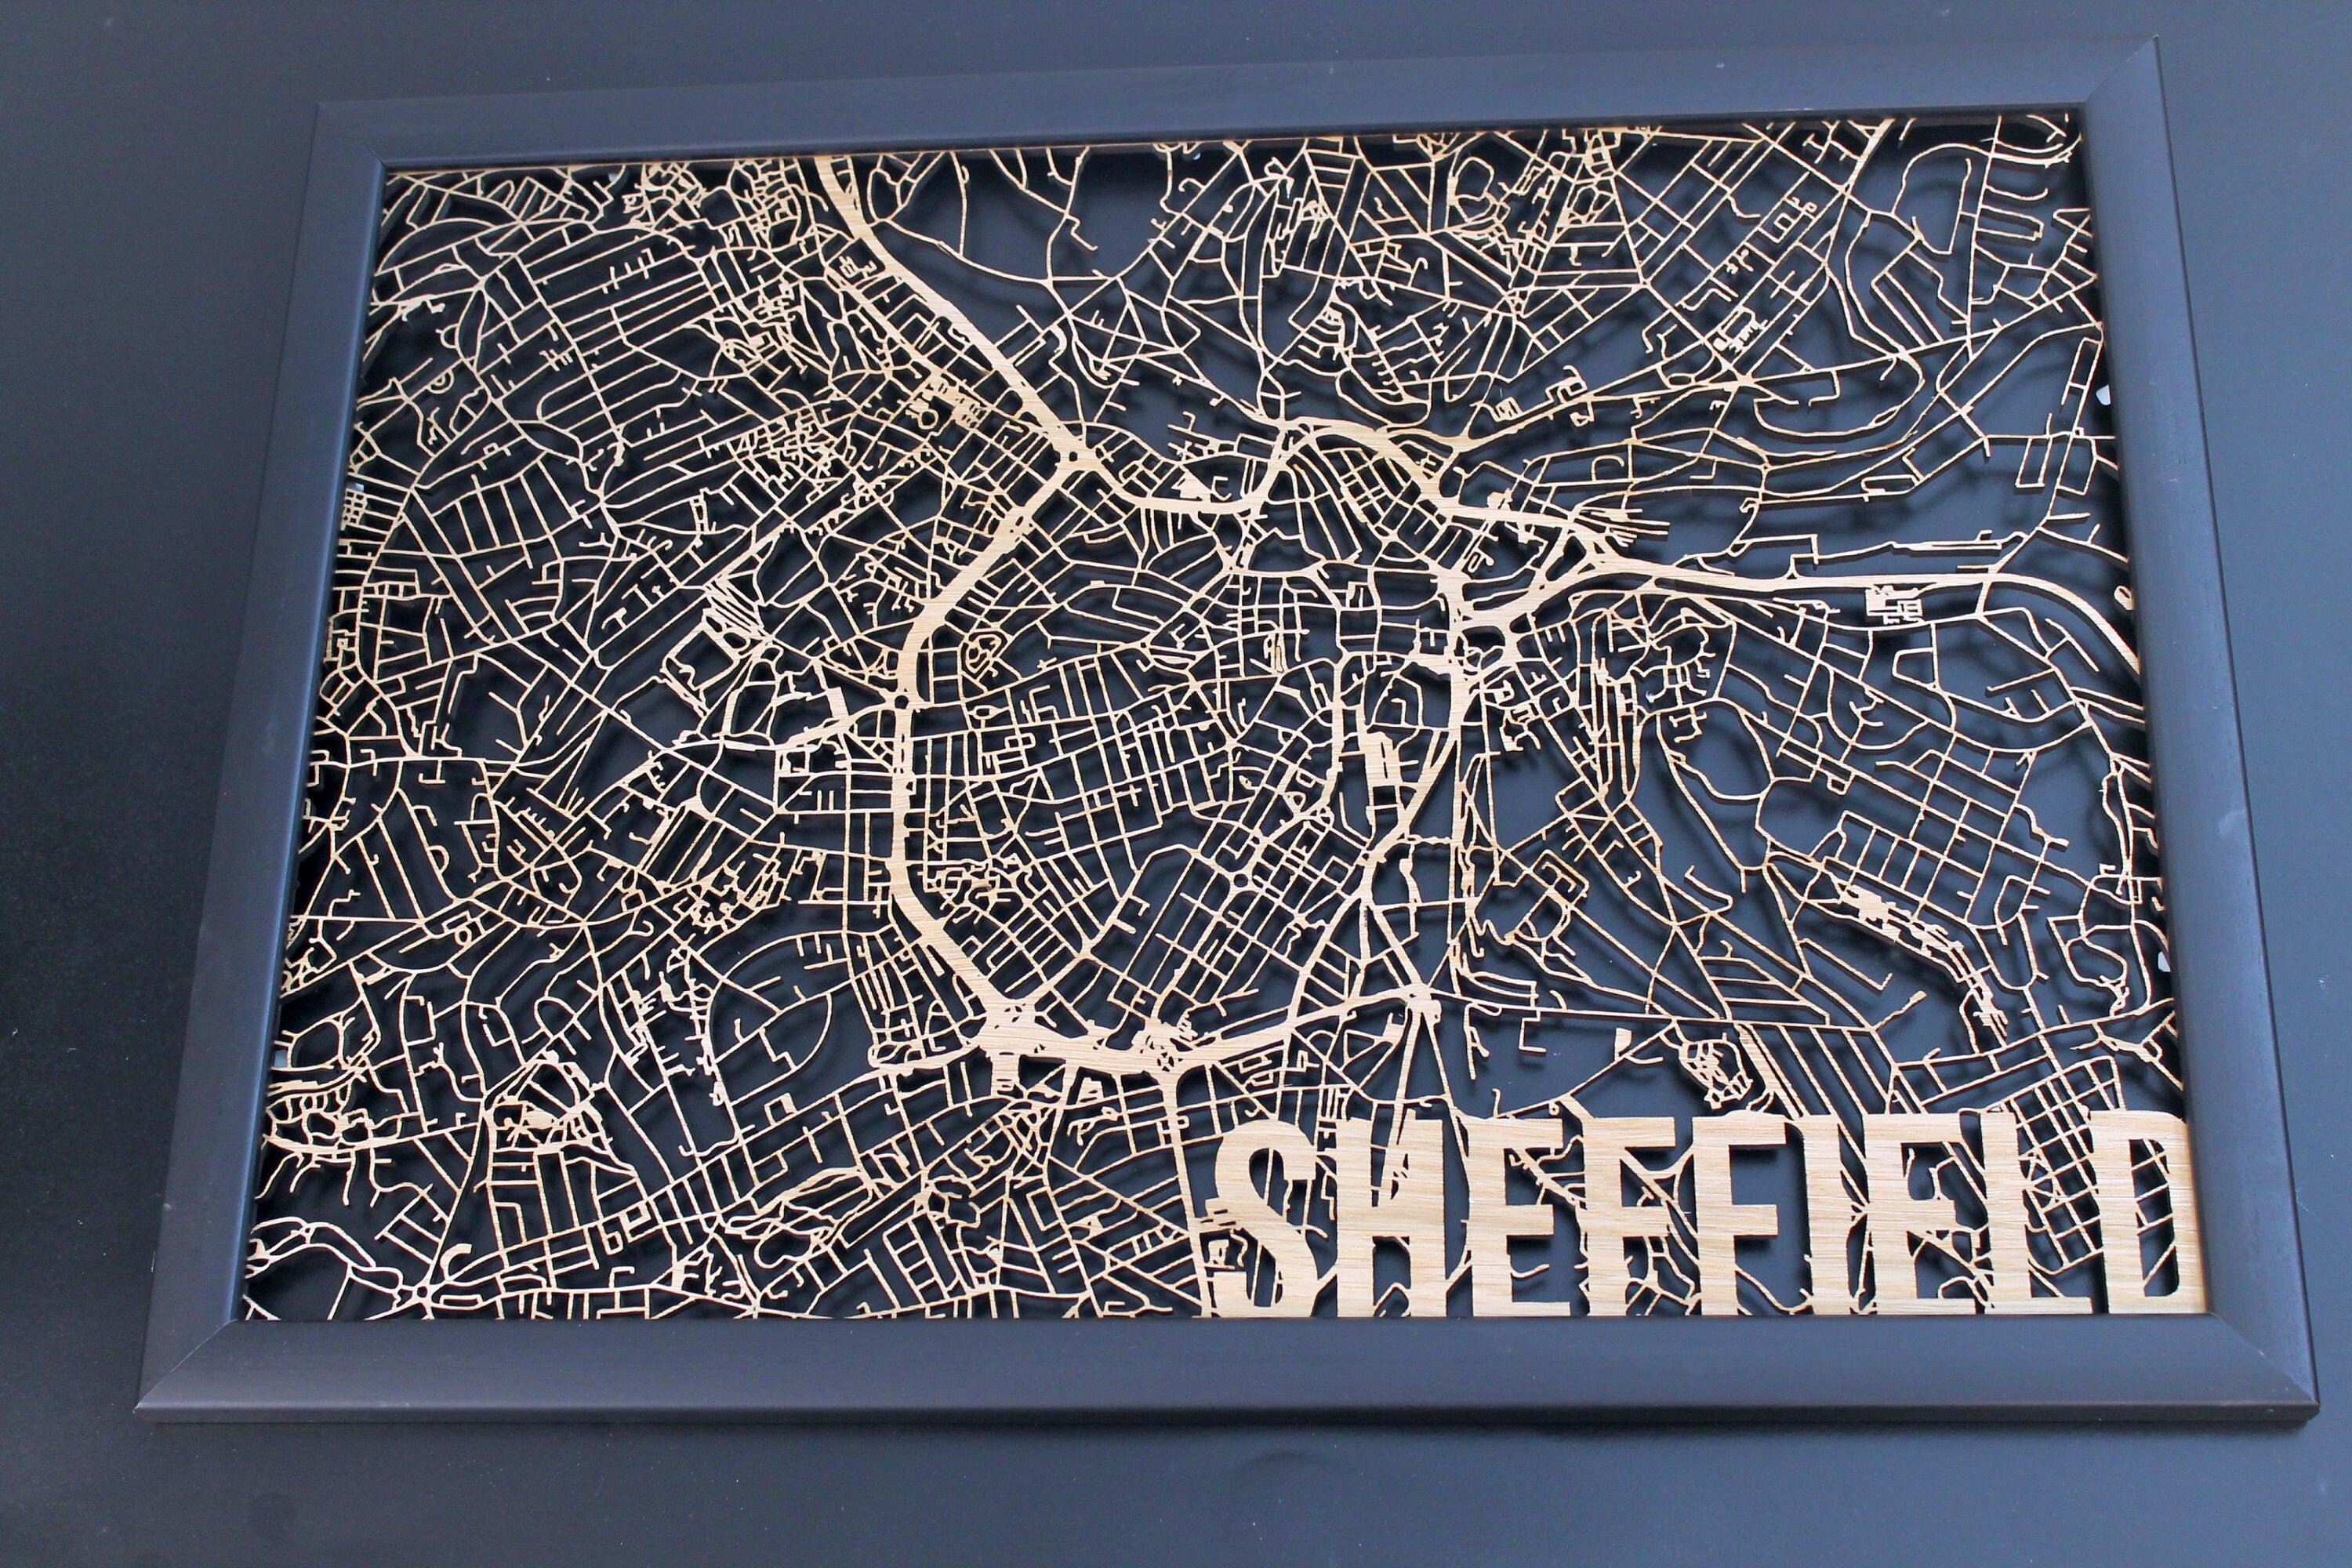 Sheffield Wood Map Laser Cut Street Maps Wooden Map